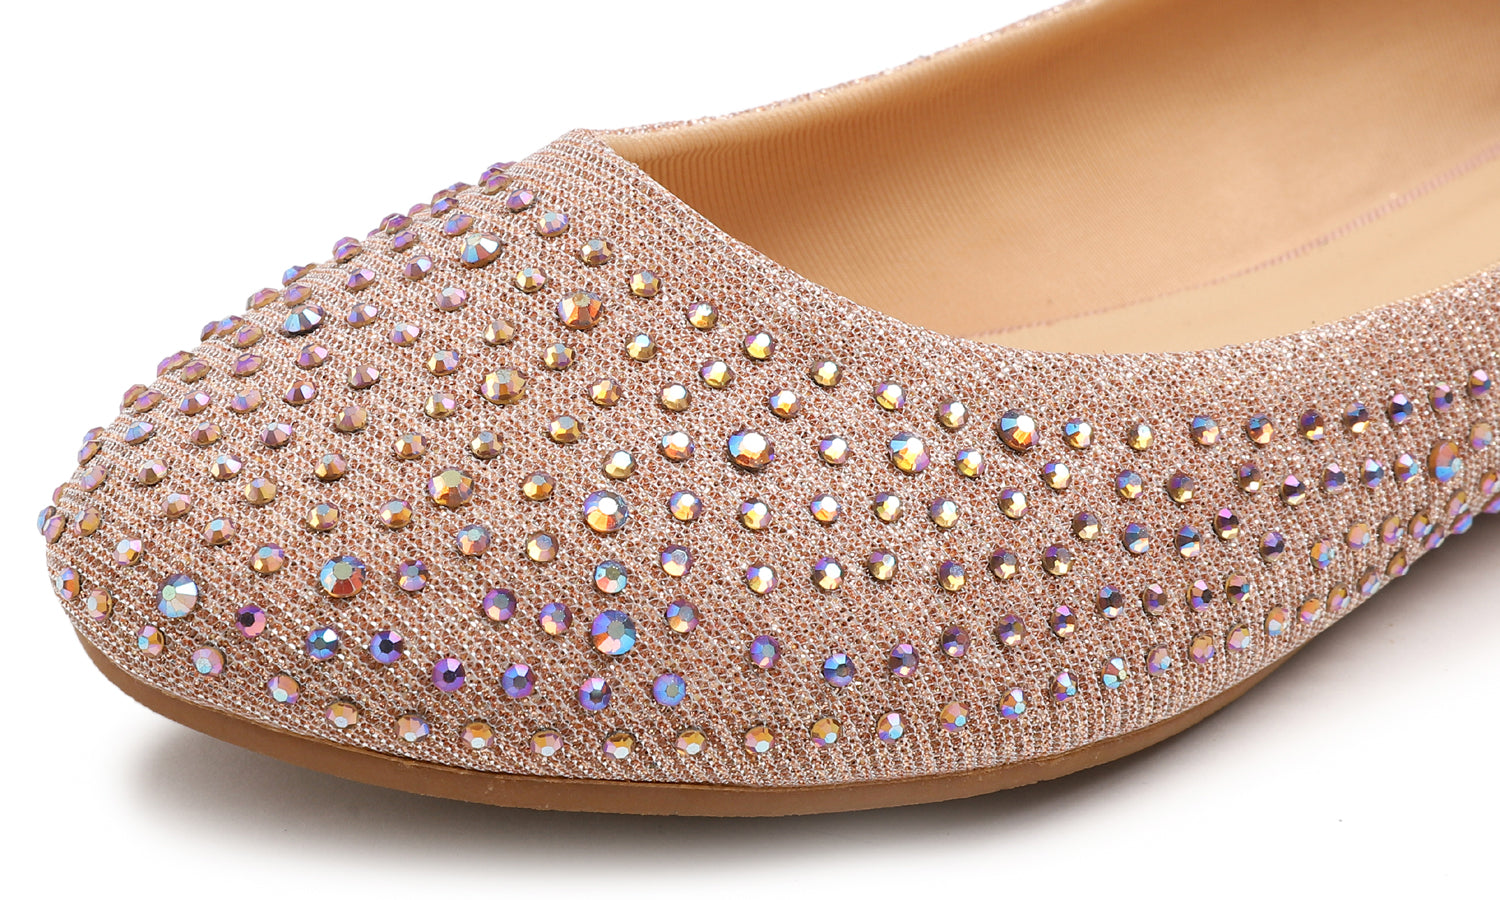 Feversole Women's Rhinestone Flat Shoes Sparkly Embellished Party Wedding Dress Ballets Rose Gold Lurex